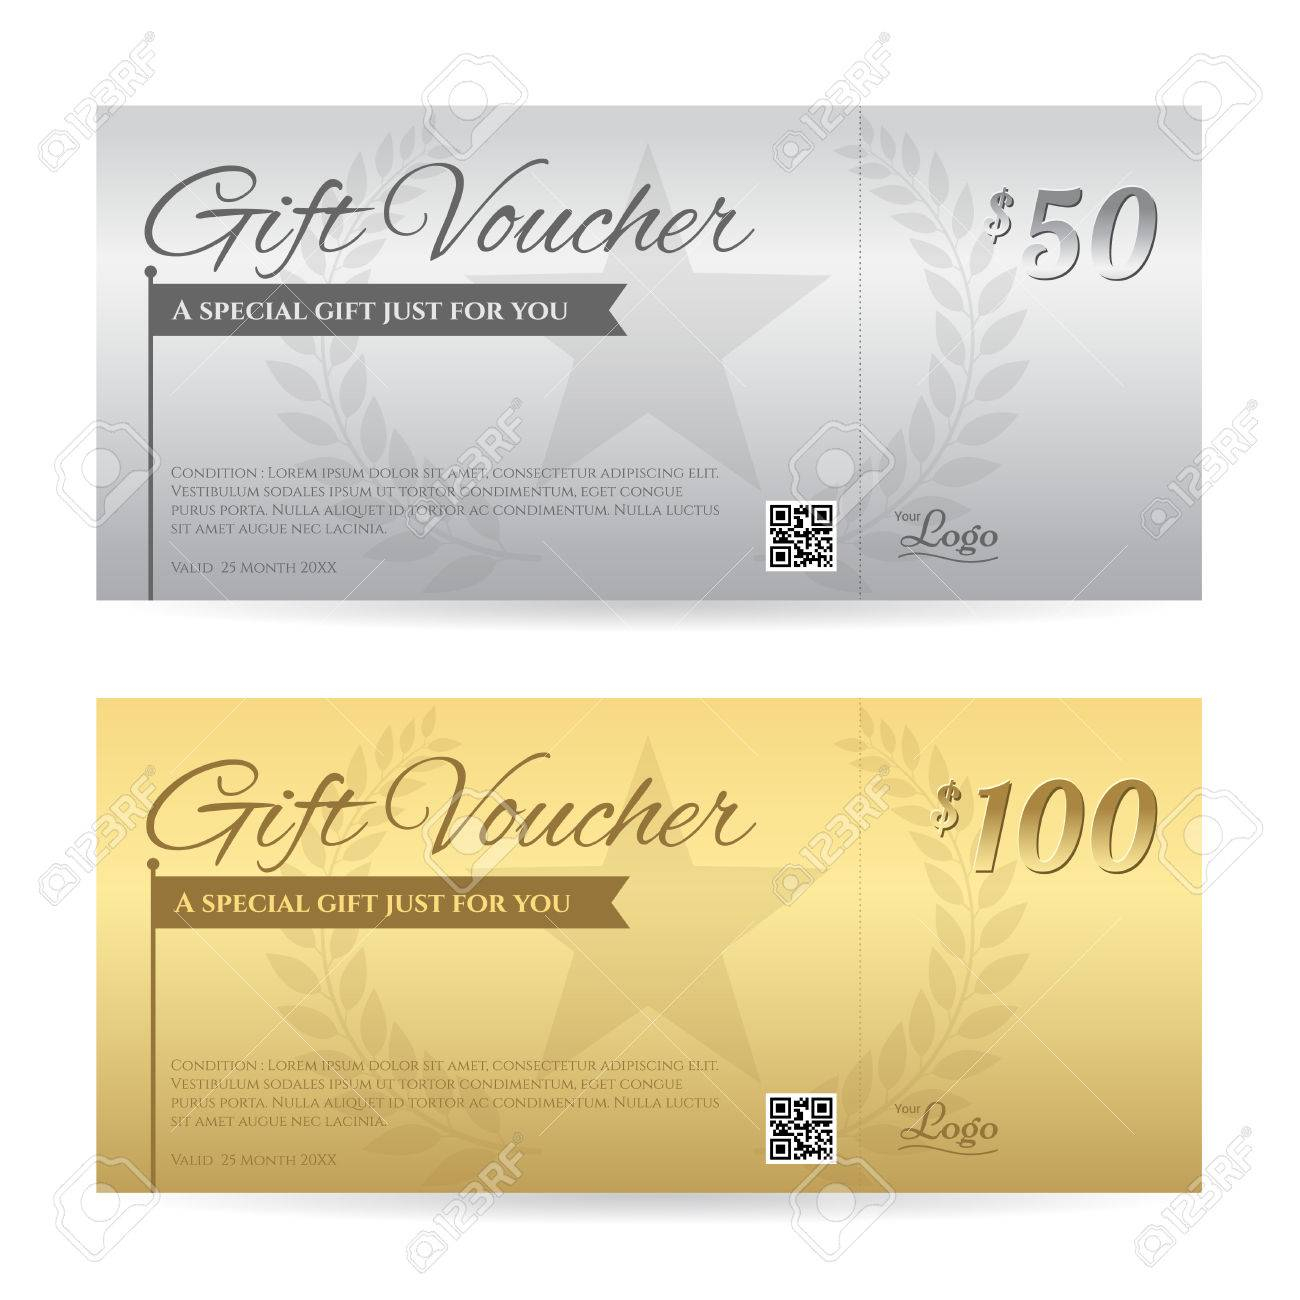 Elegant Gift Voucher Or Gift Card Certificate Template In Gold.. With Elegant Gift Certificate Template